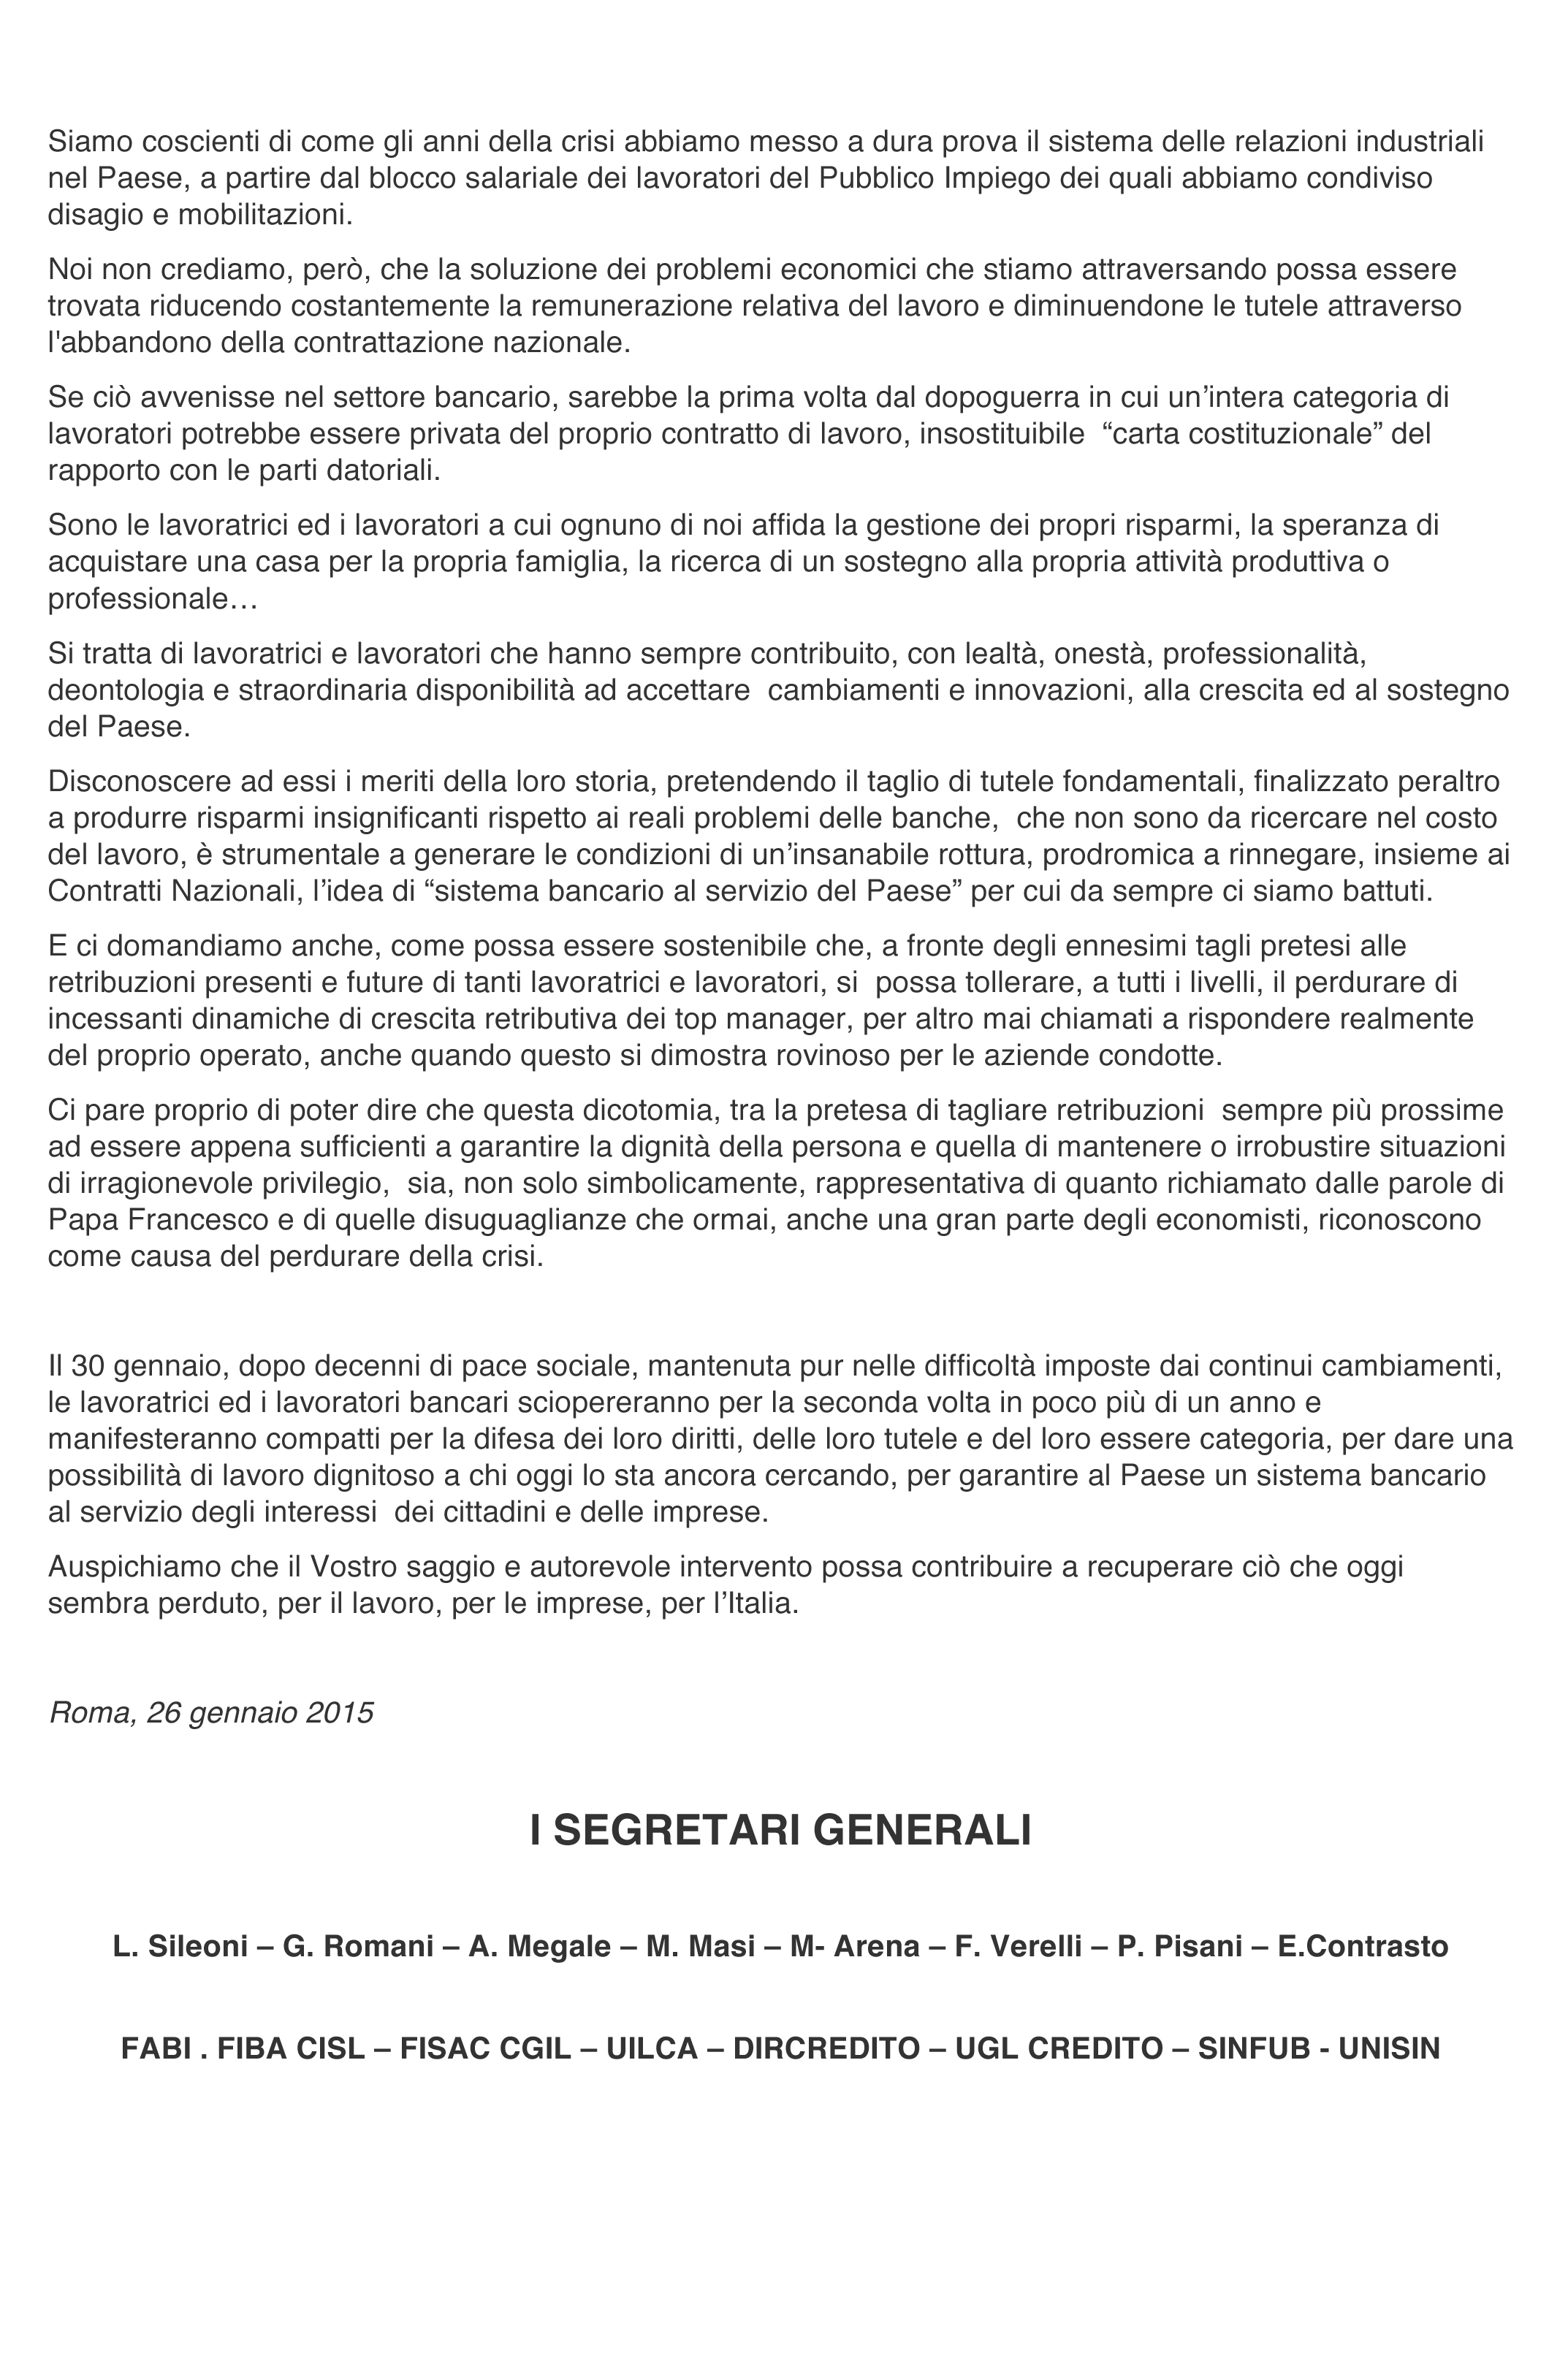 Microsoft Word - lettera a Renzi, Patuelli e Azzi 2.doc